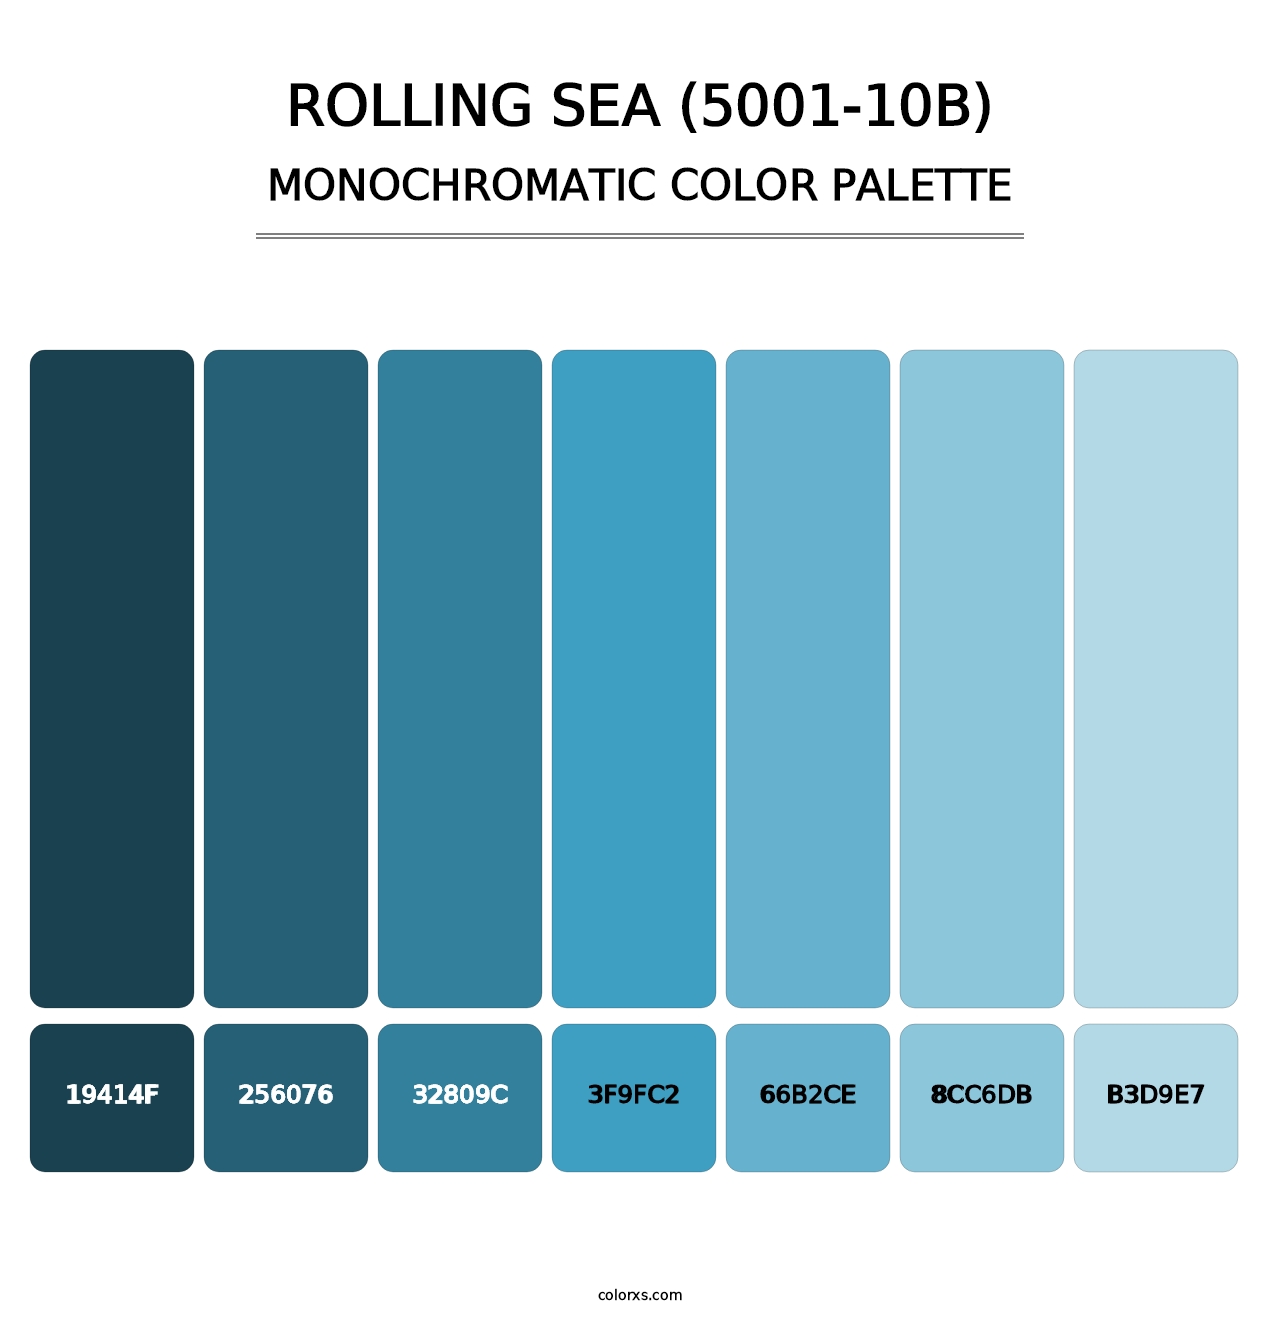 Rolling Sea (5001-10B) - Monochromatic Color Palette